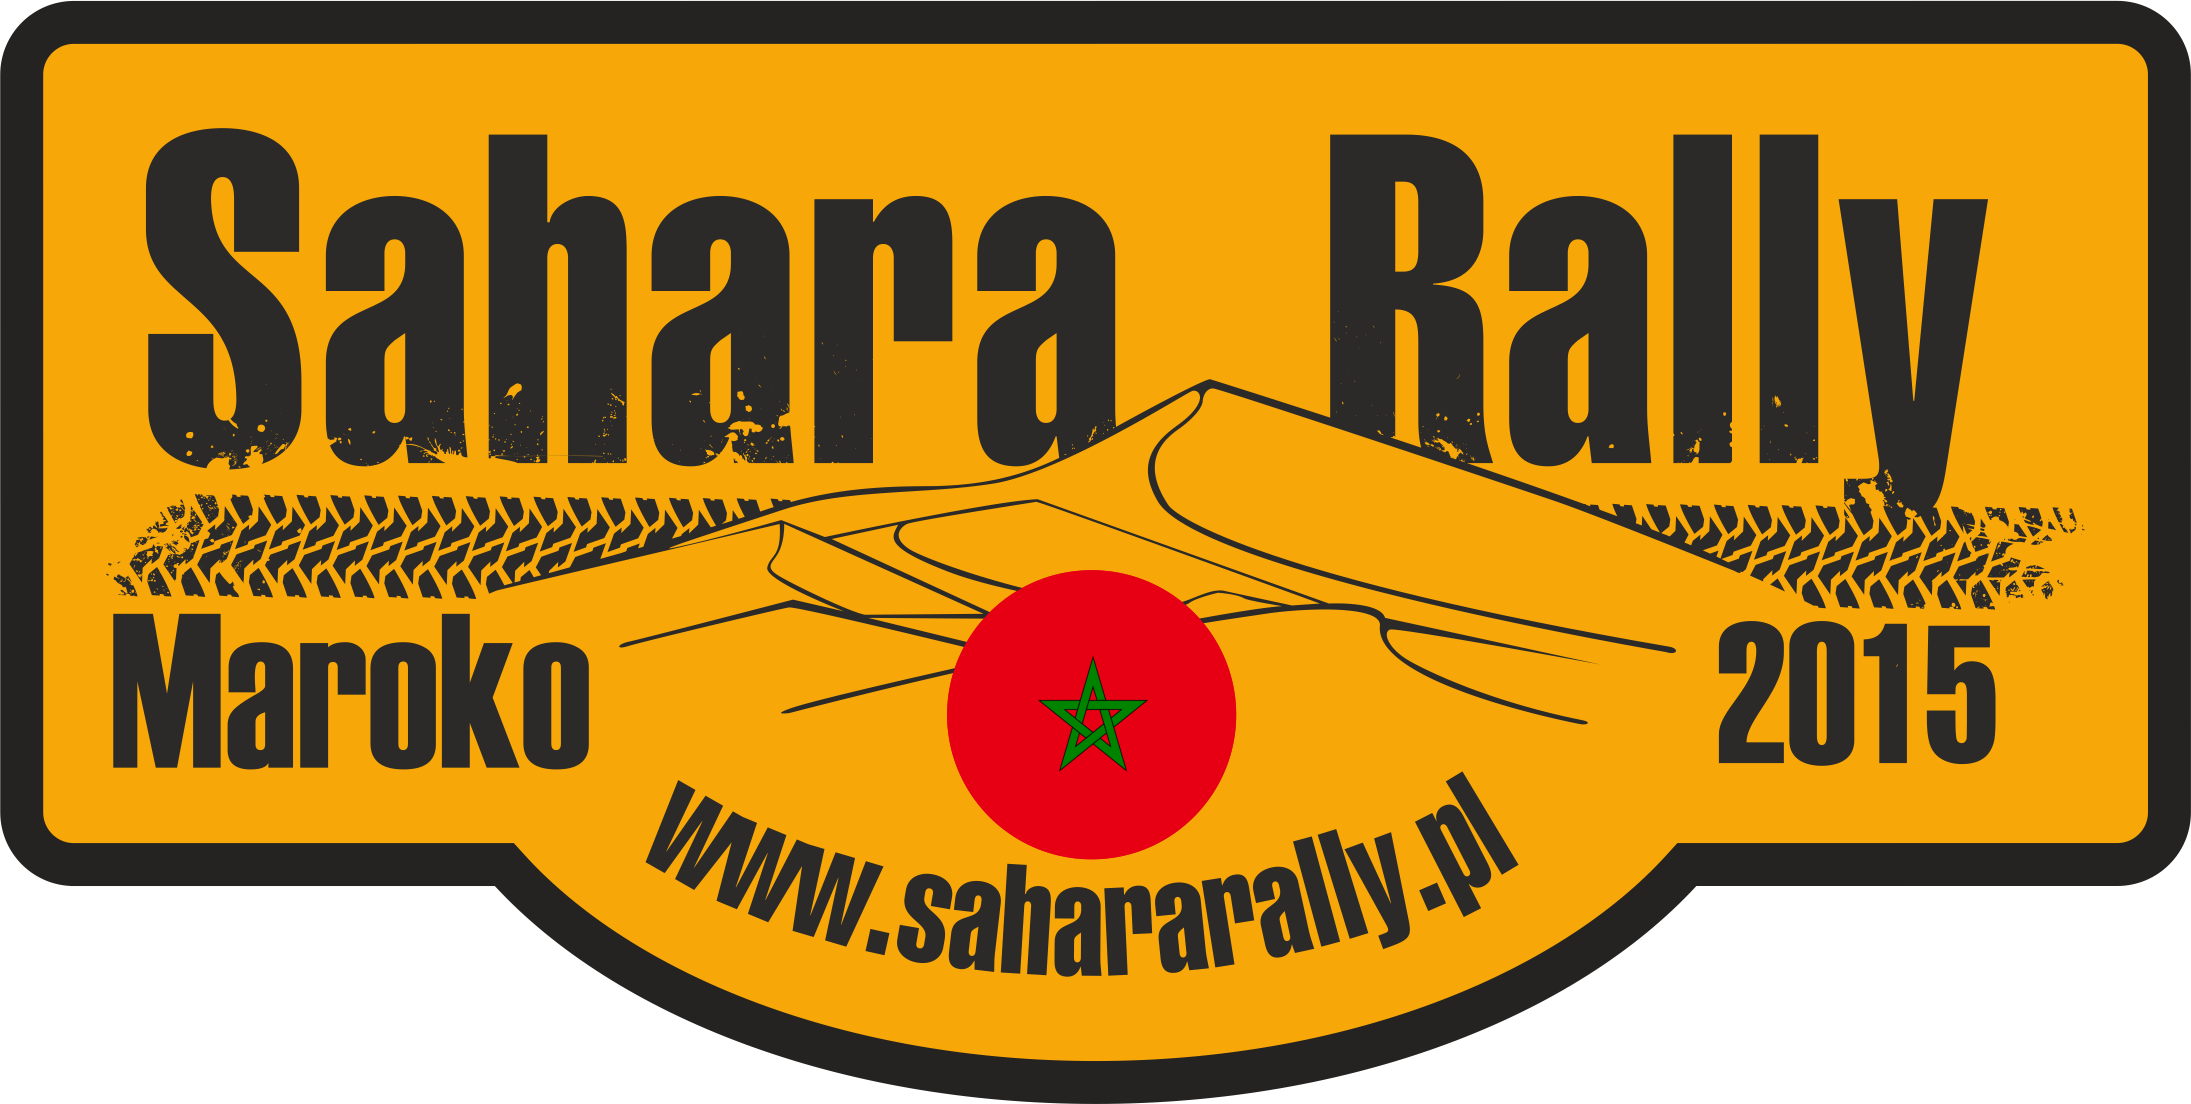 Sahararally Maroko 2015.png